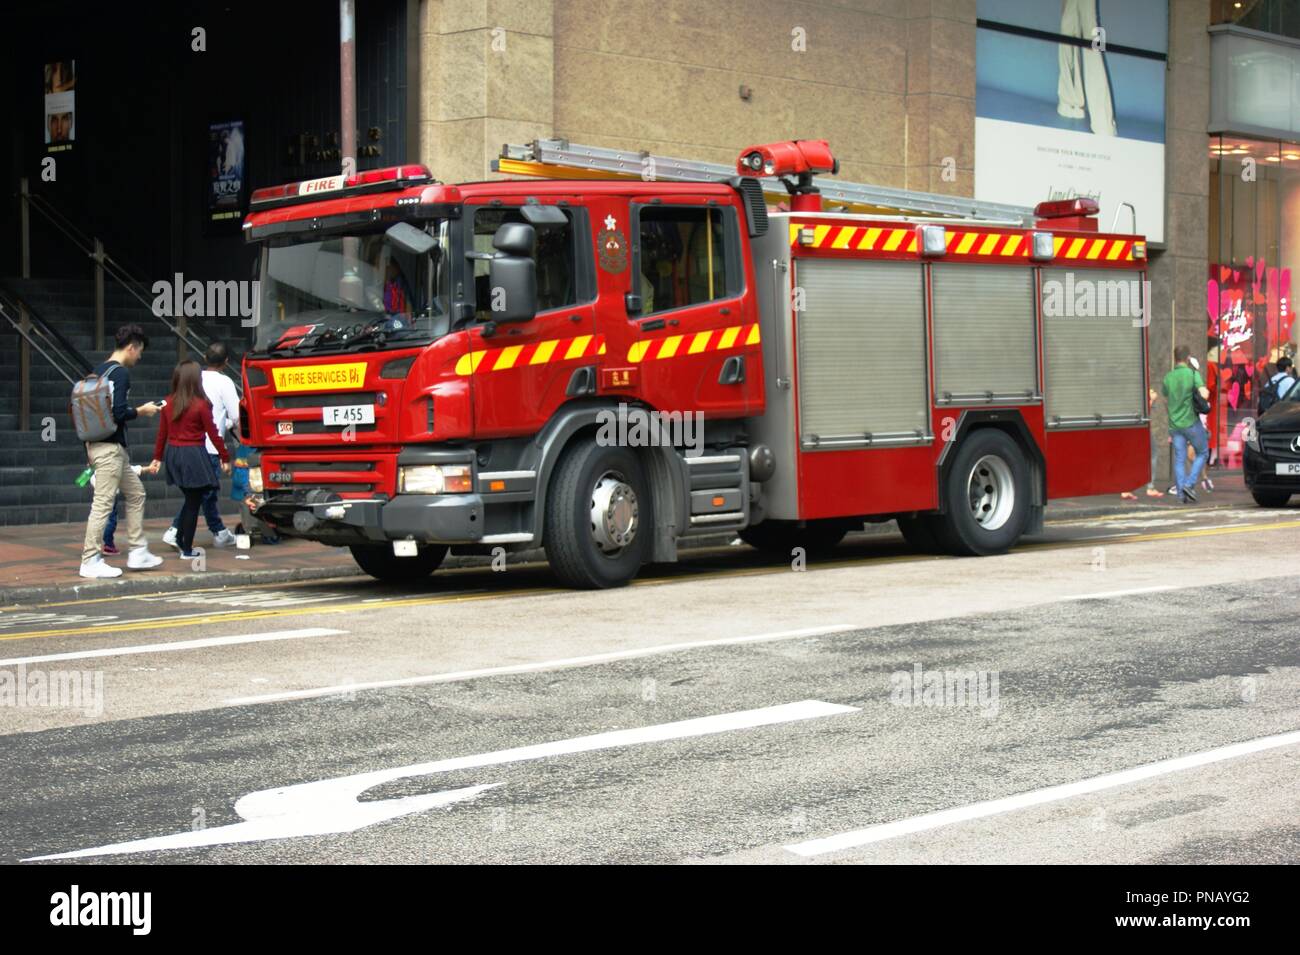 Scania Brand gerät Nr. F455 der Feuerwehr in Hong Kong Kowloon Hong Kong Stockfoto